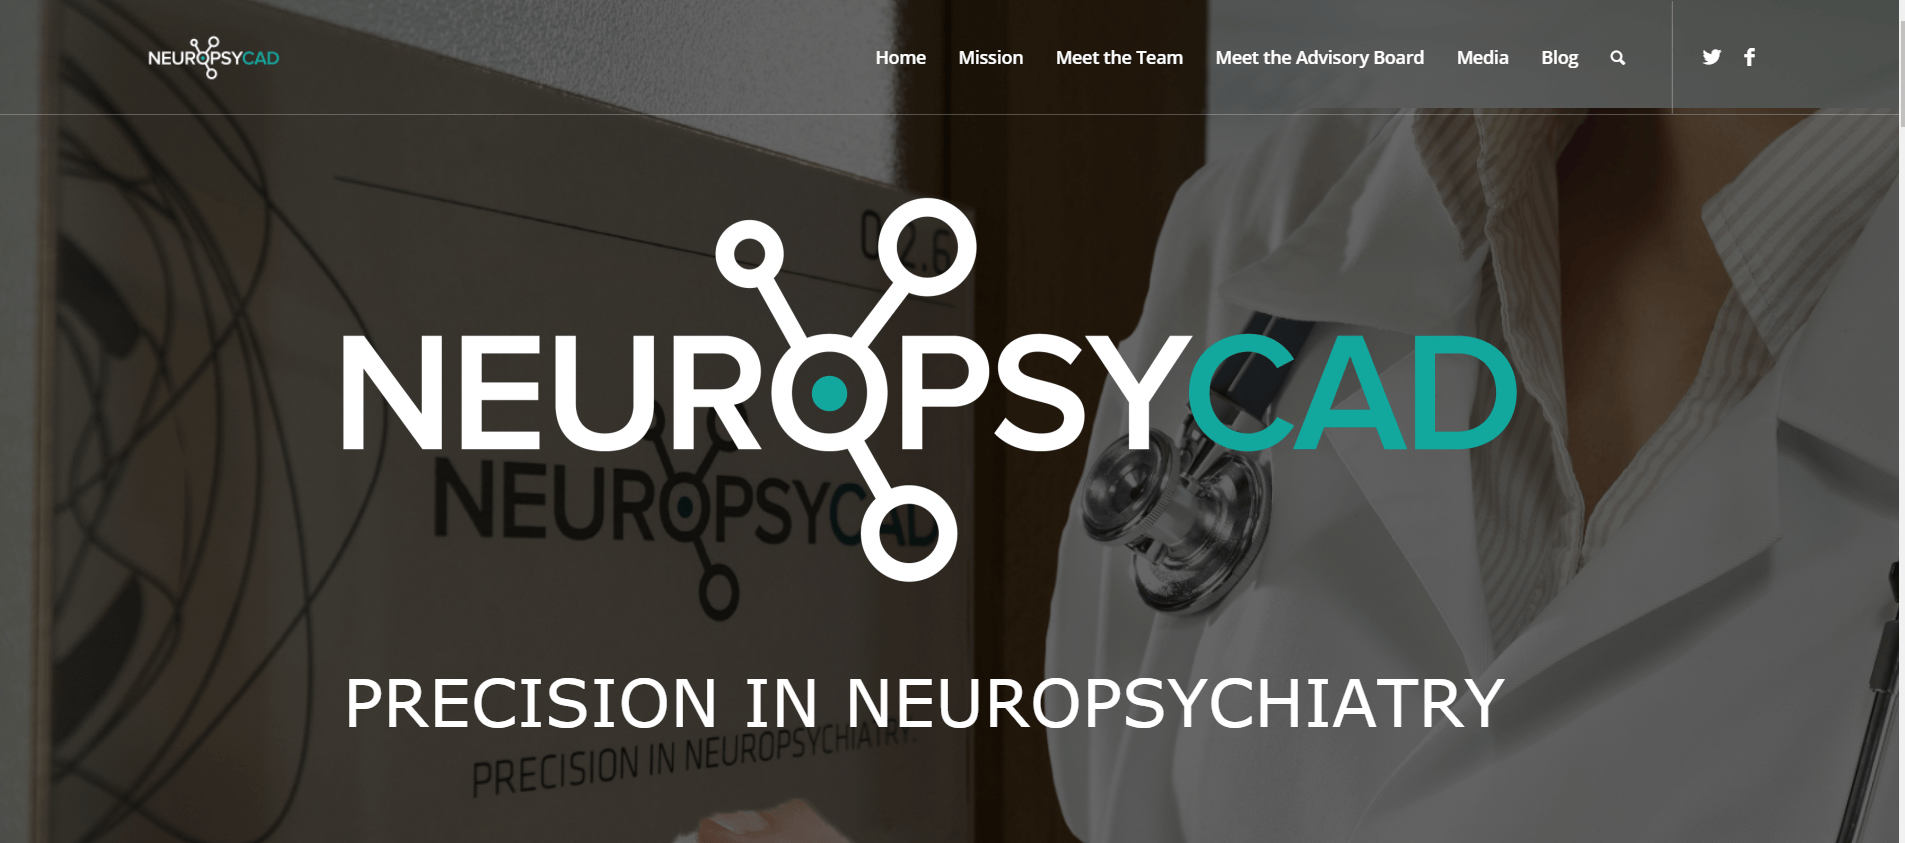 neuropsycad.tech-web-summit-2017